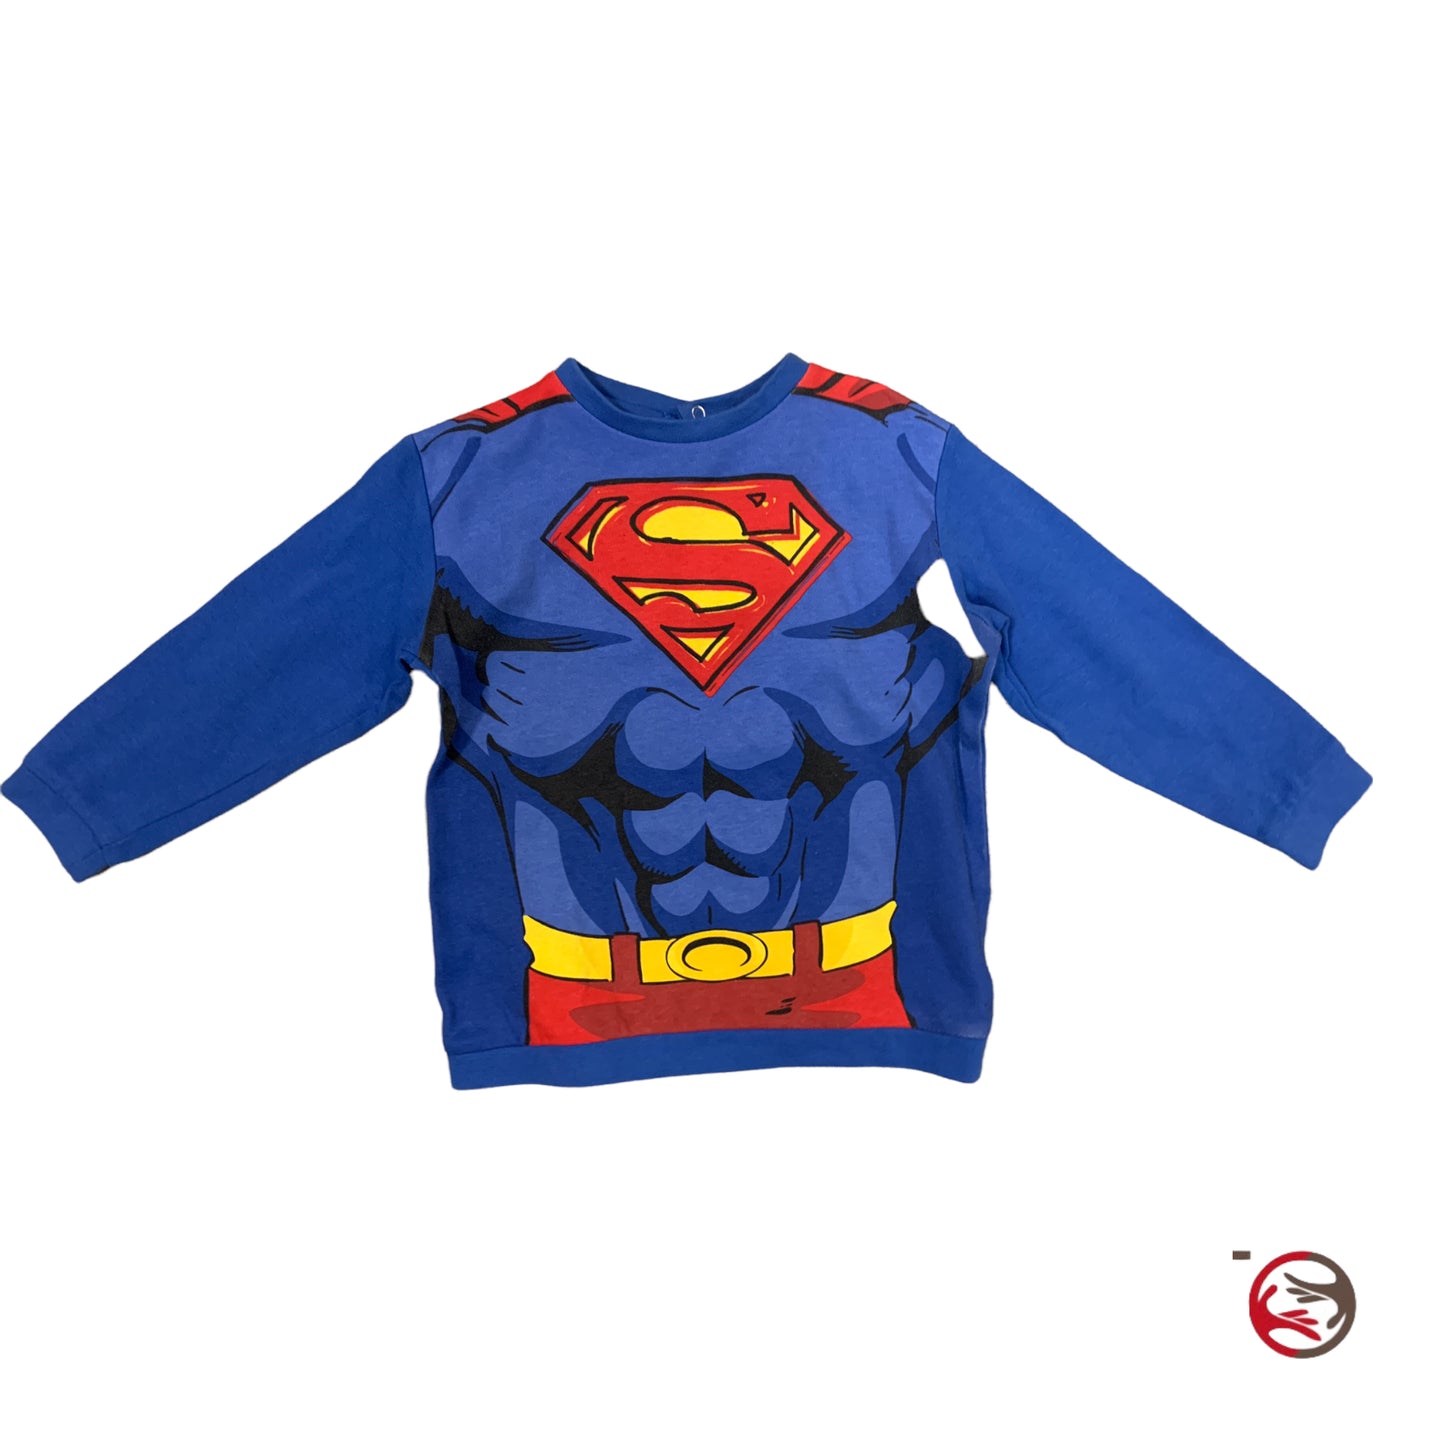 Superman sweatshirt for boys 18-24 months